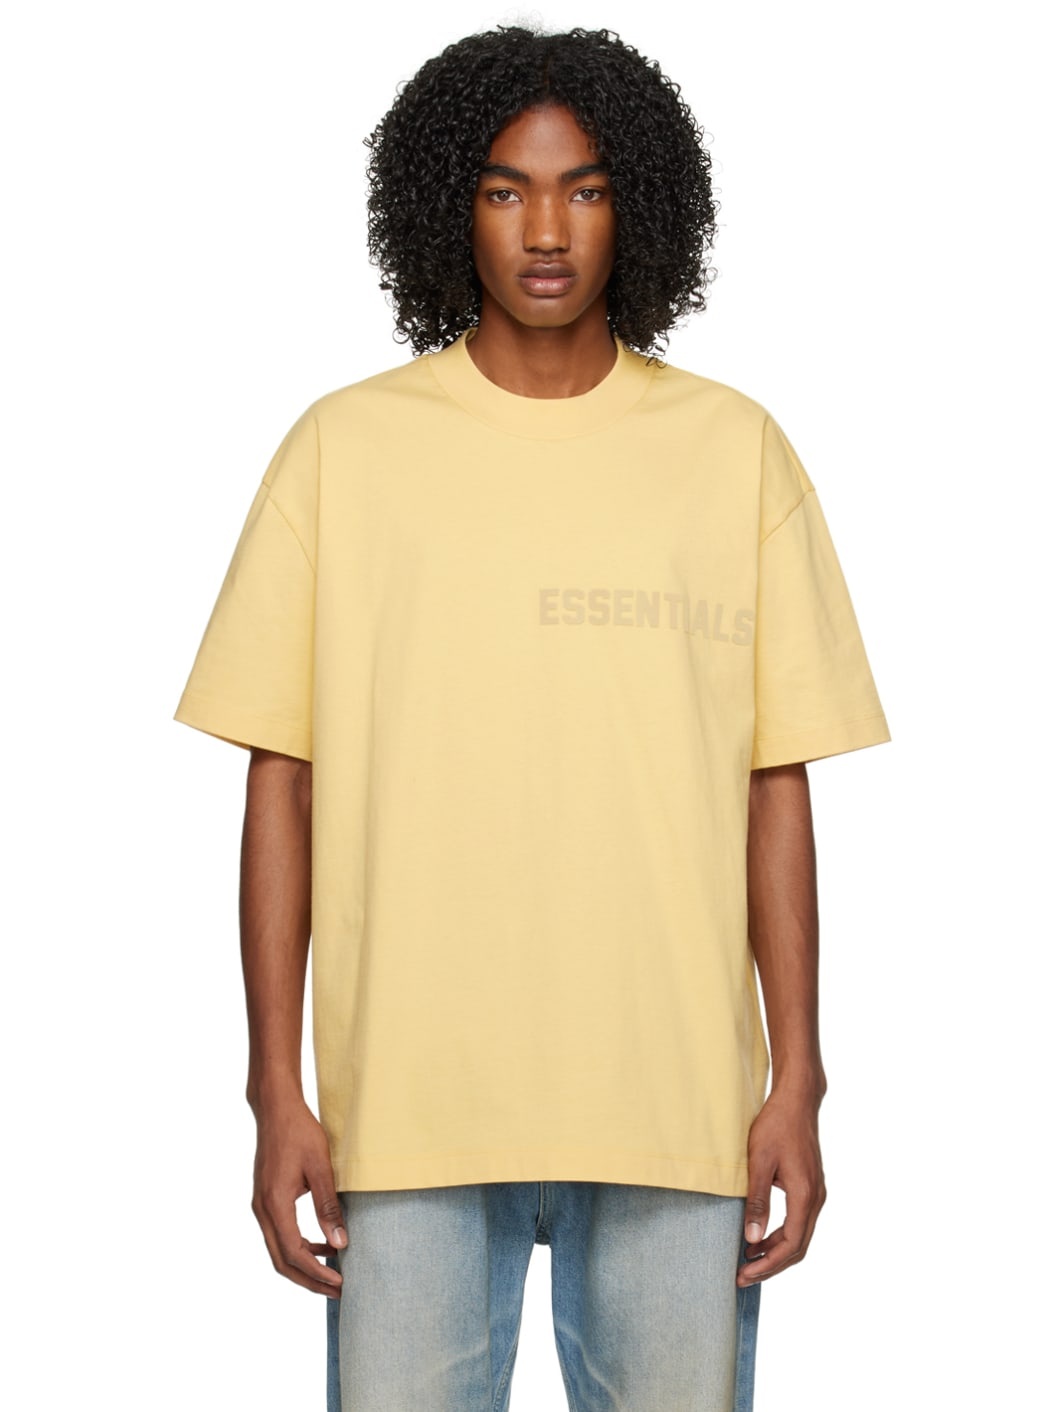 SSENSE Exclusive Yellow T-Shirt - 1